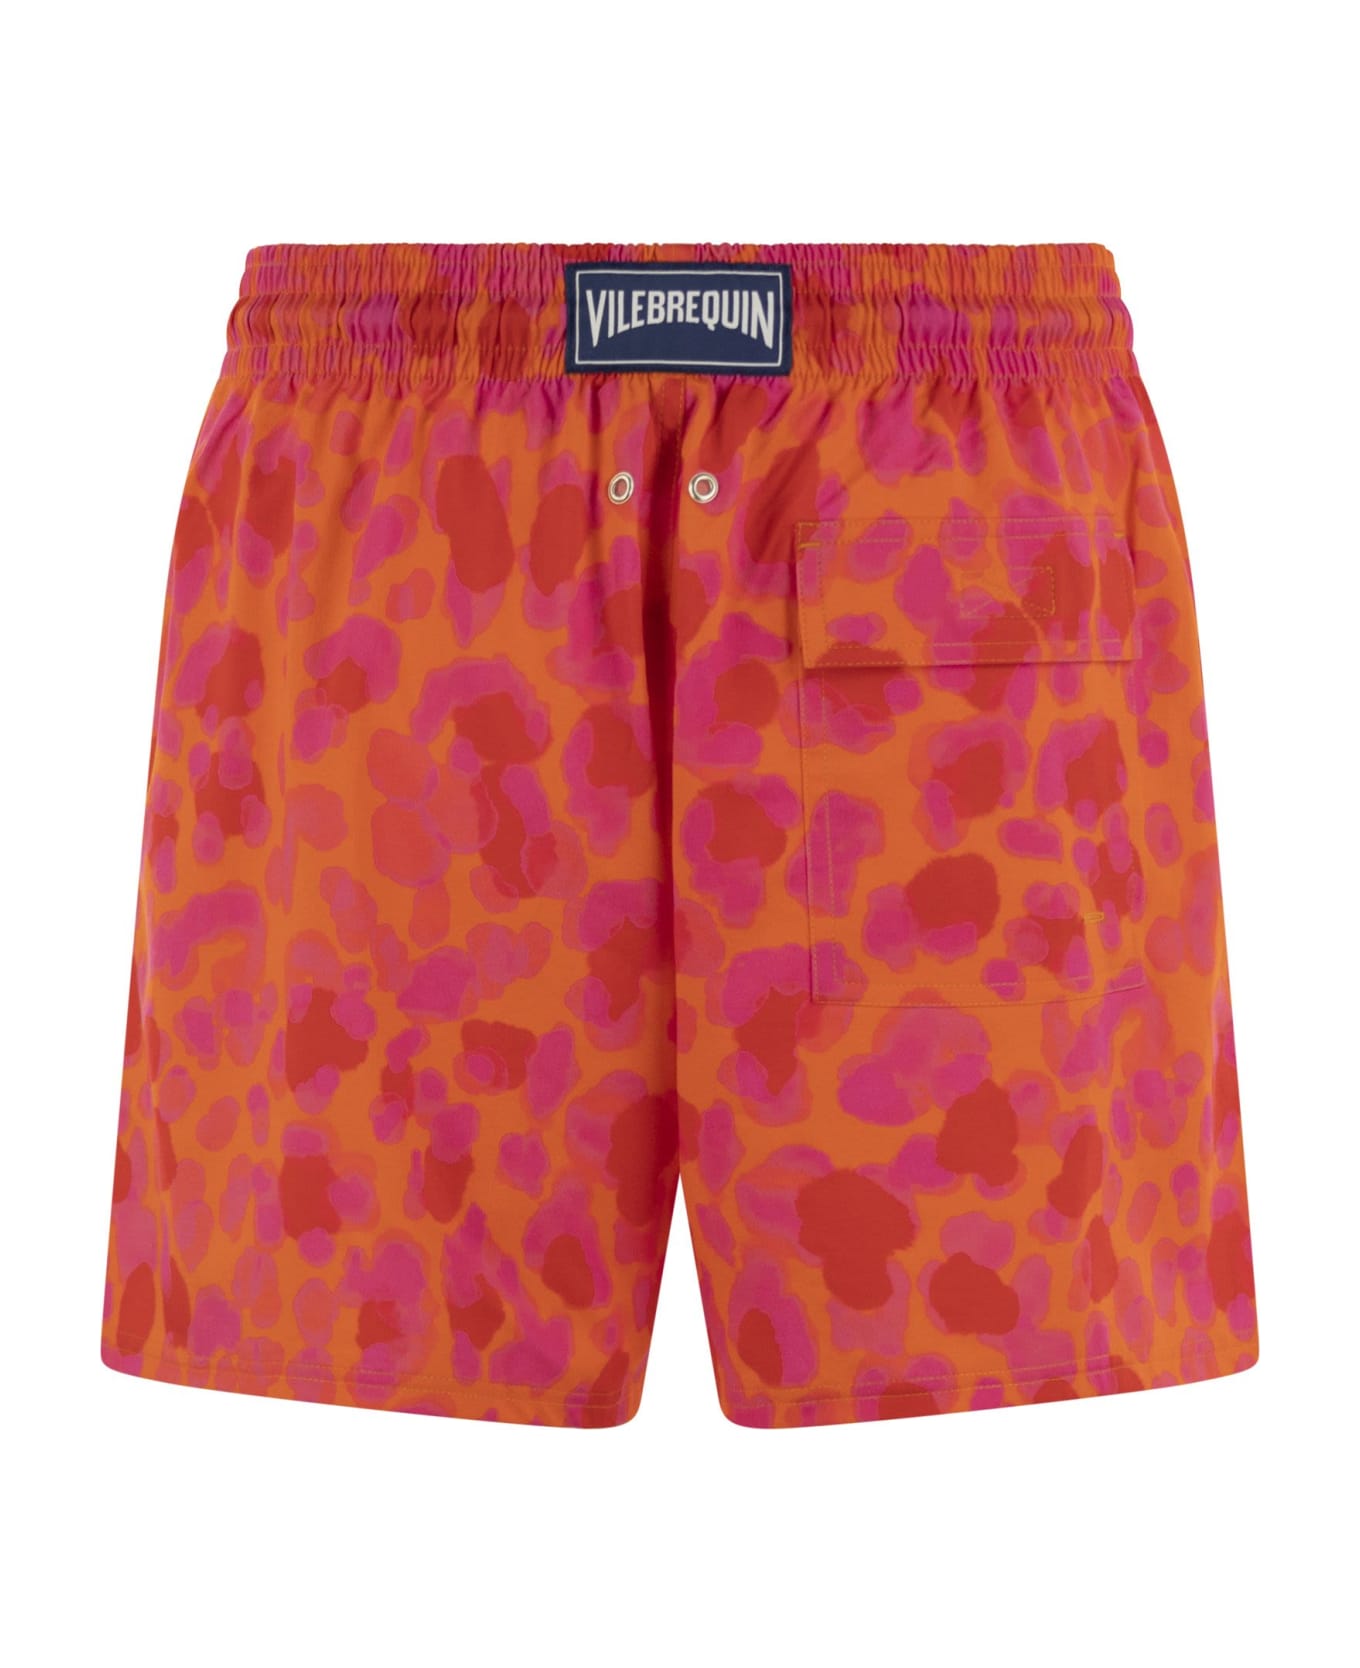 Vilebrequin Stretch Beach Shorts With Patterned Print - Orange 水着